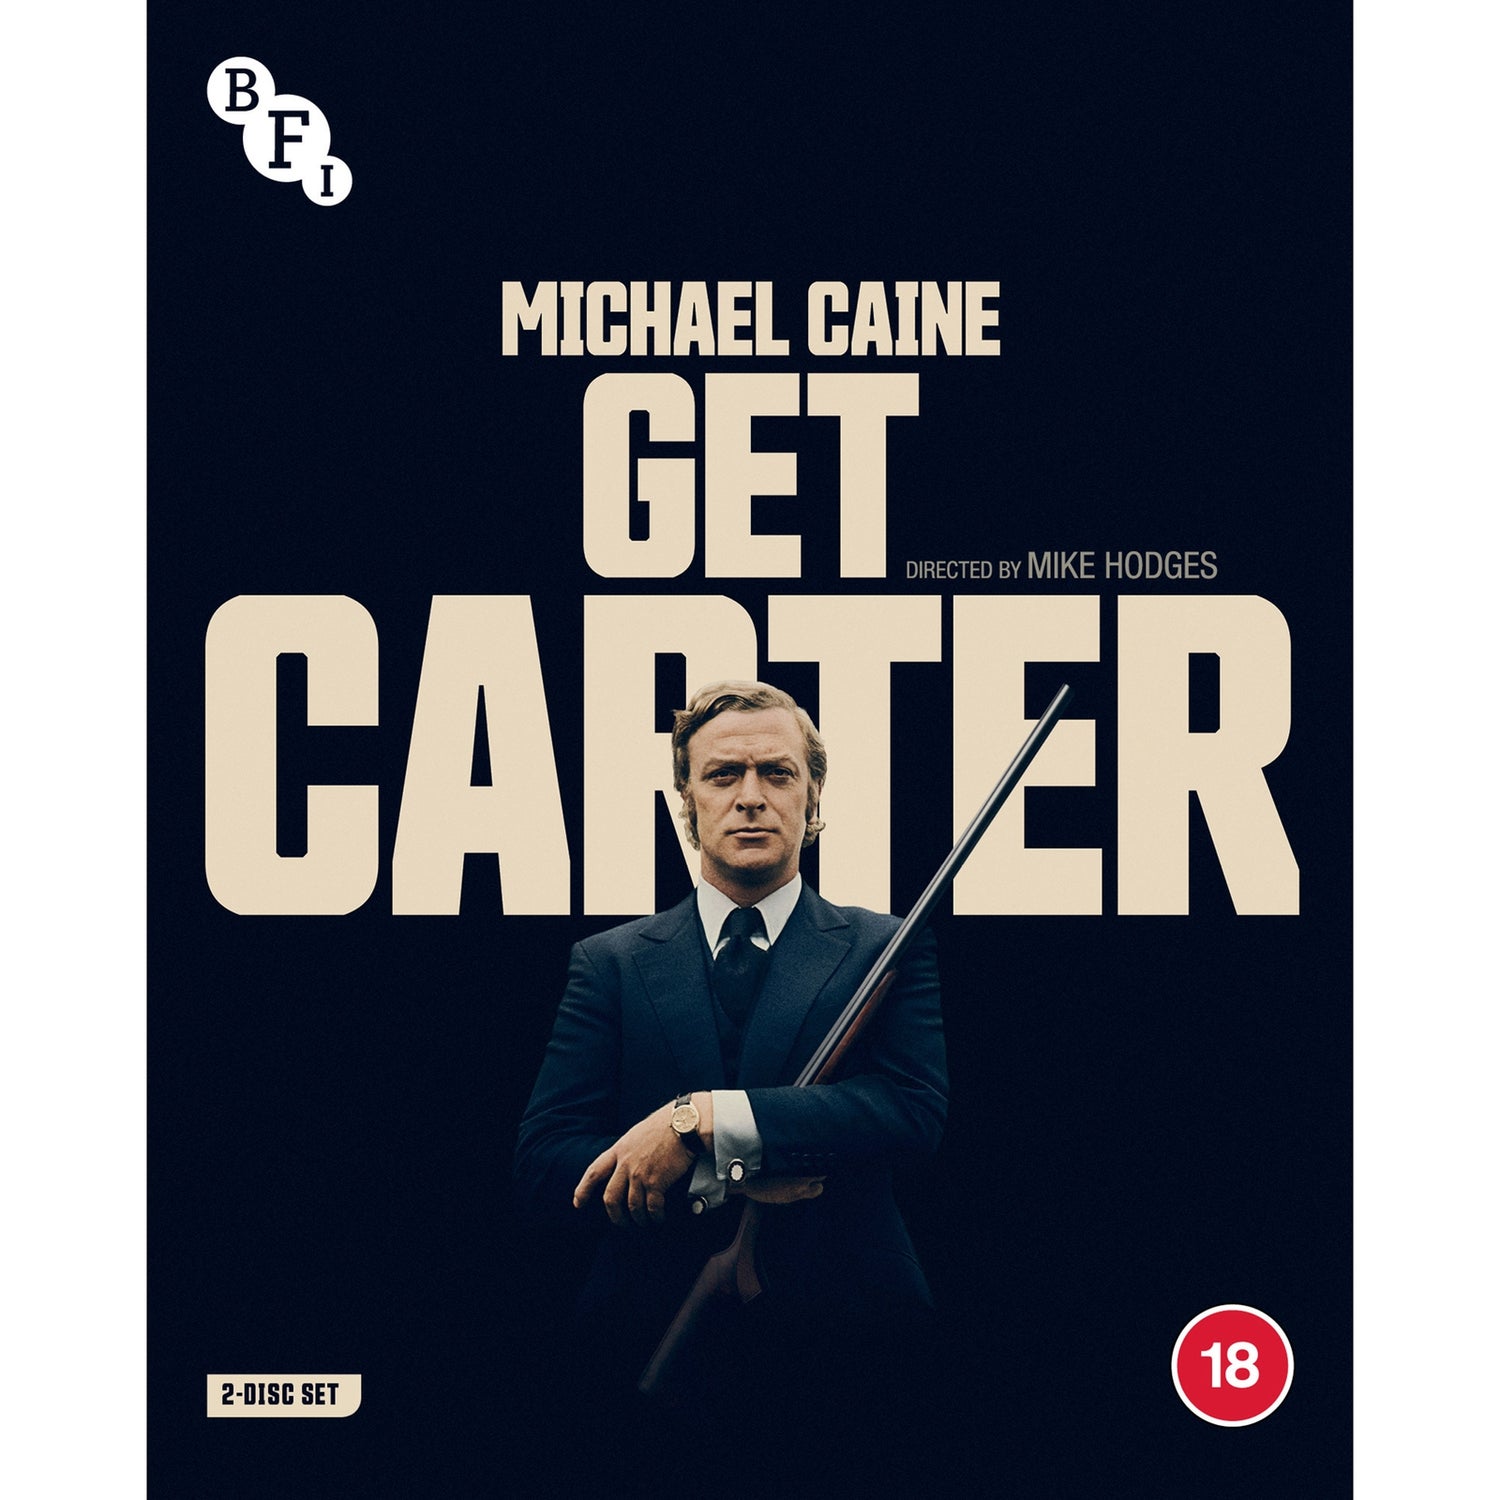 Get Carter 4K Ultra HD (Includes Blu-ray)